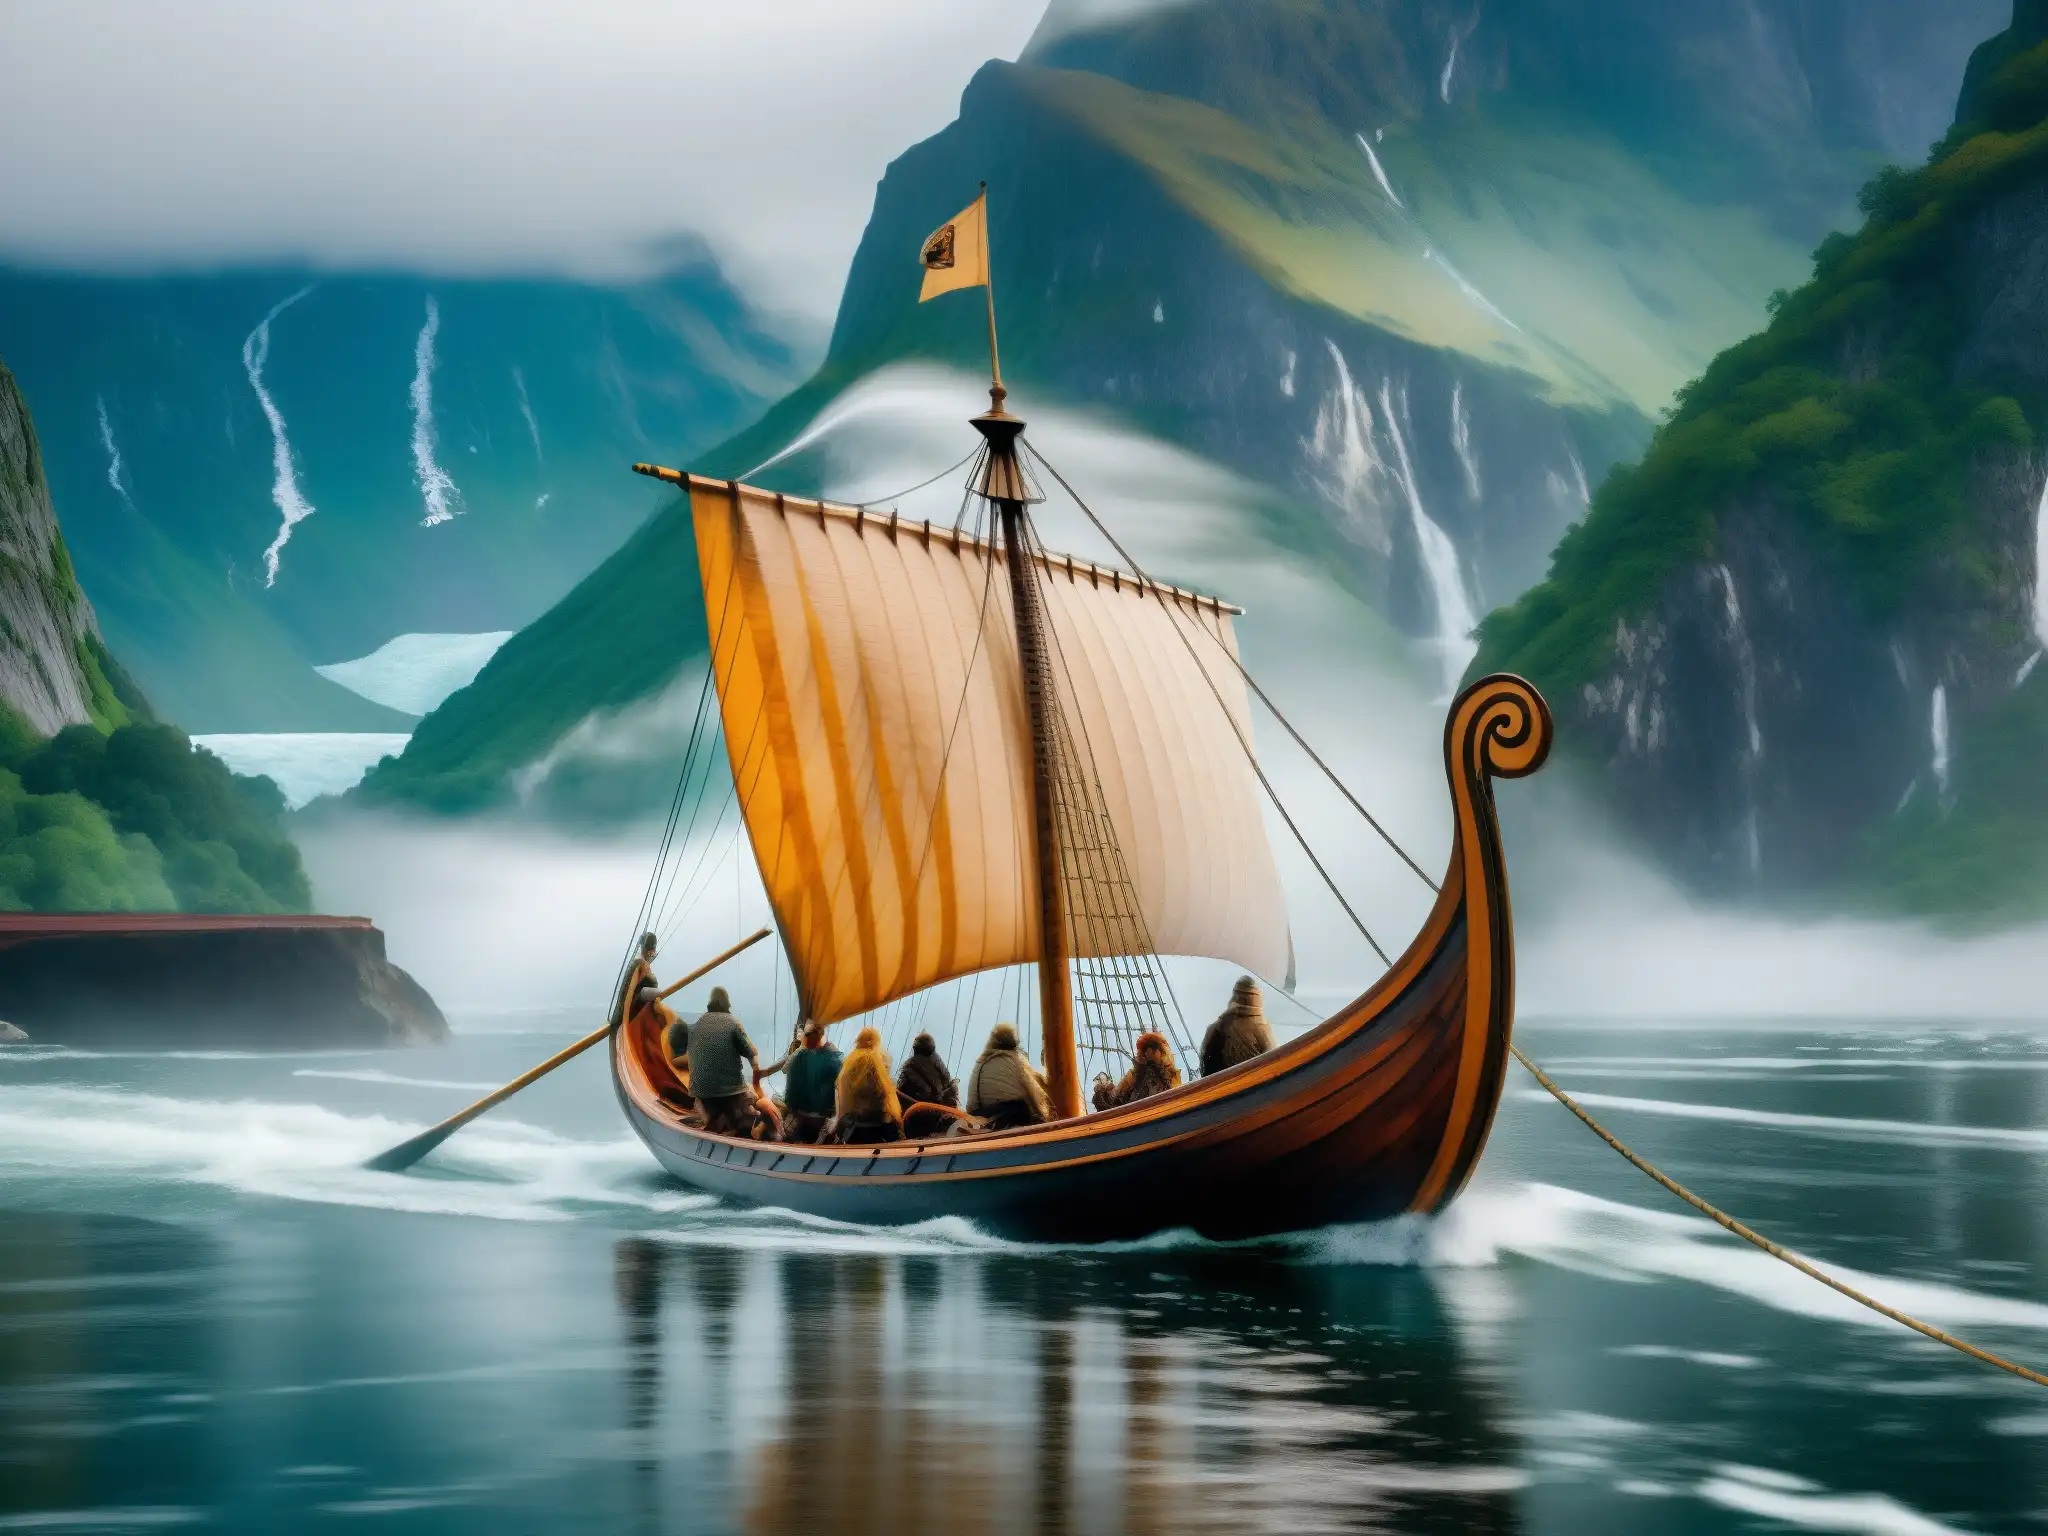 Un majestuoso barco vikingo surcando un fiordo brumoso, rodeado de imponentes montañas